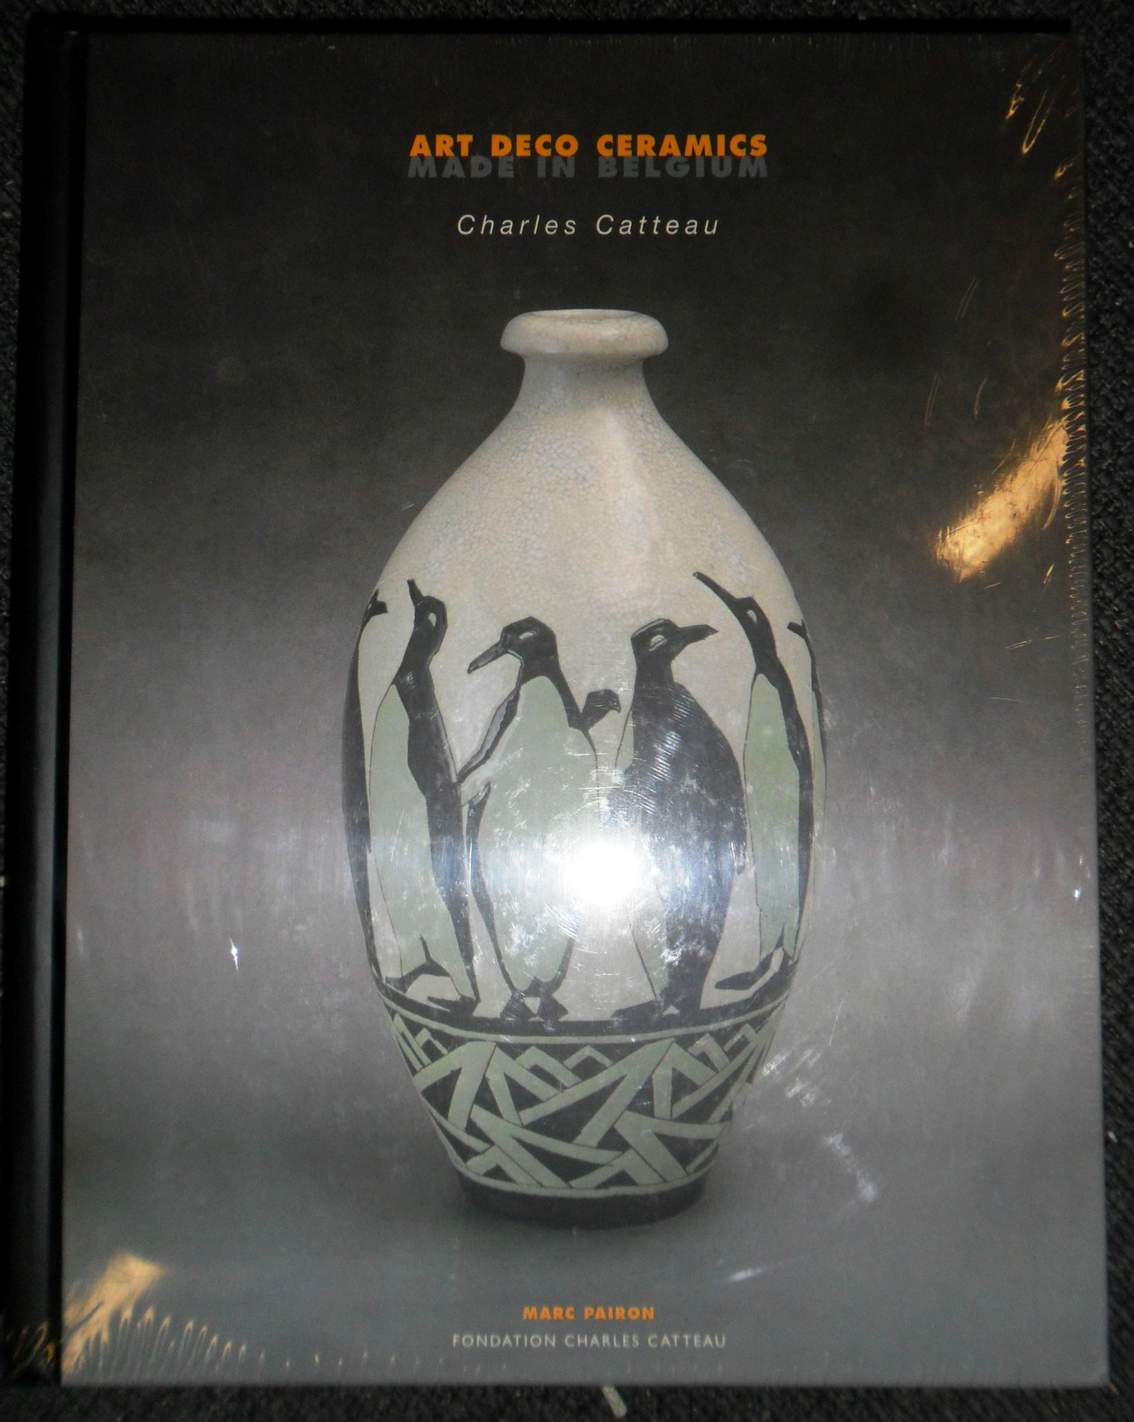 Book cover 20060125: PAIRON Marc (Edit.), CATTEAU Charles (Foundation) | Art Deco Ceramics. Made in Belgium. Charles Catteau. [Boch Keramis]